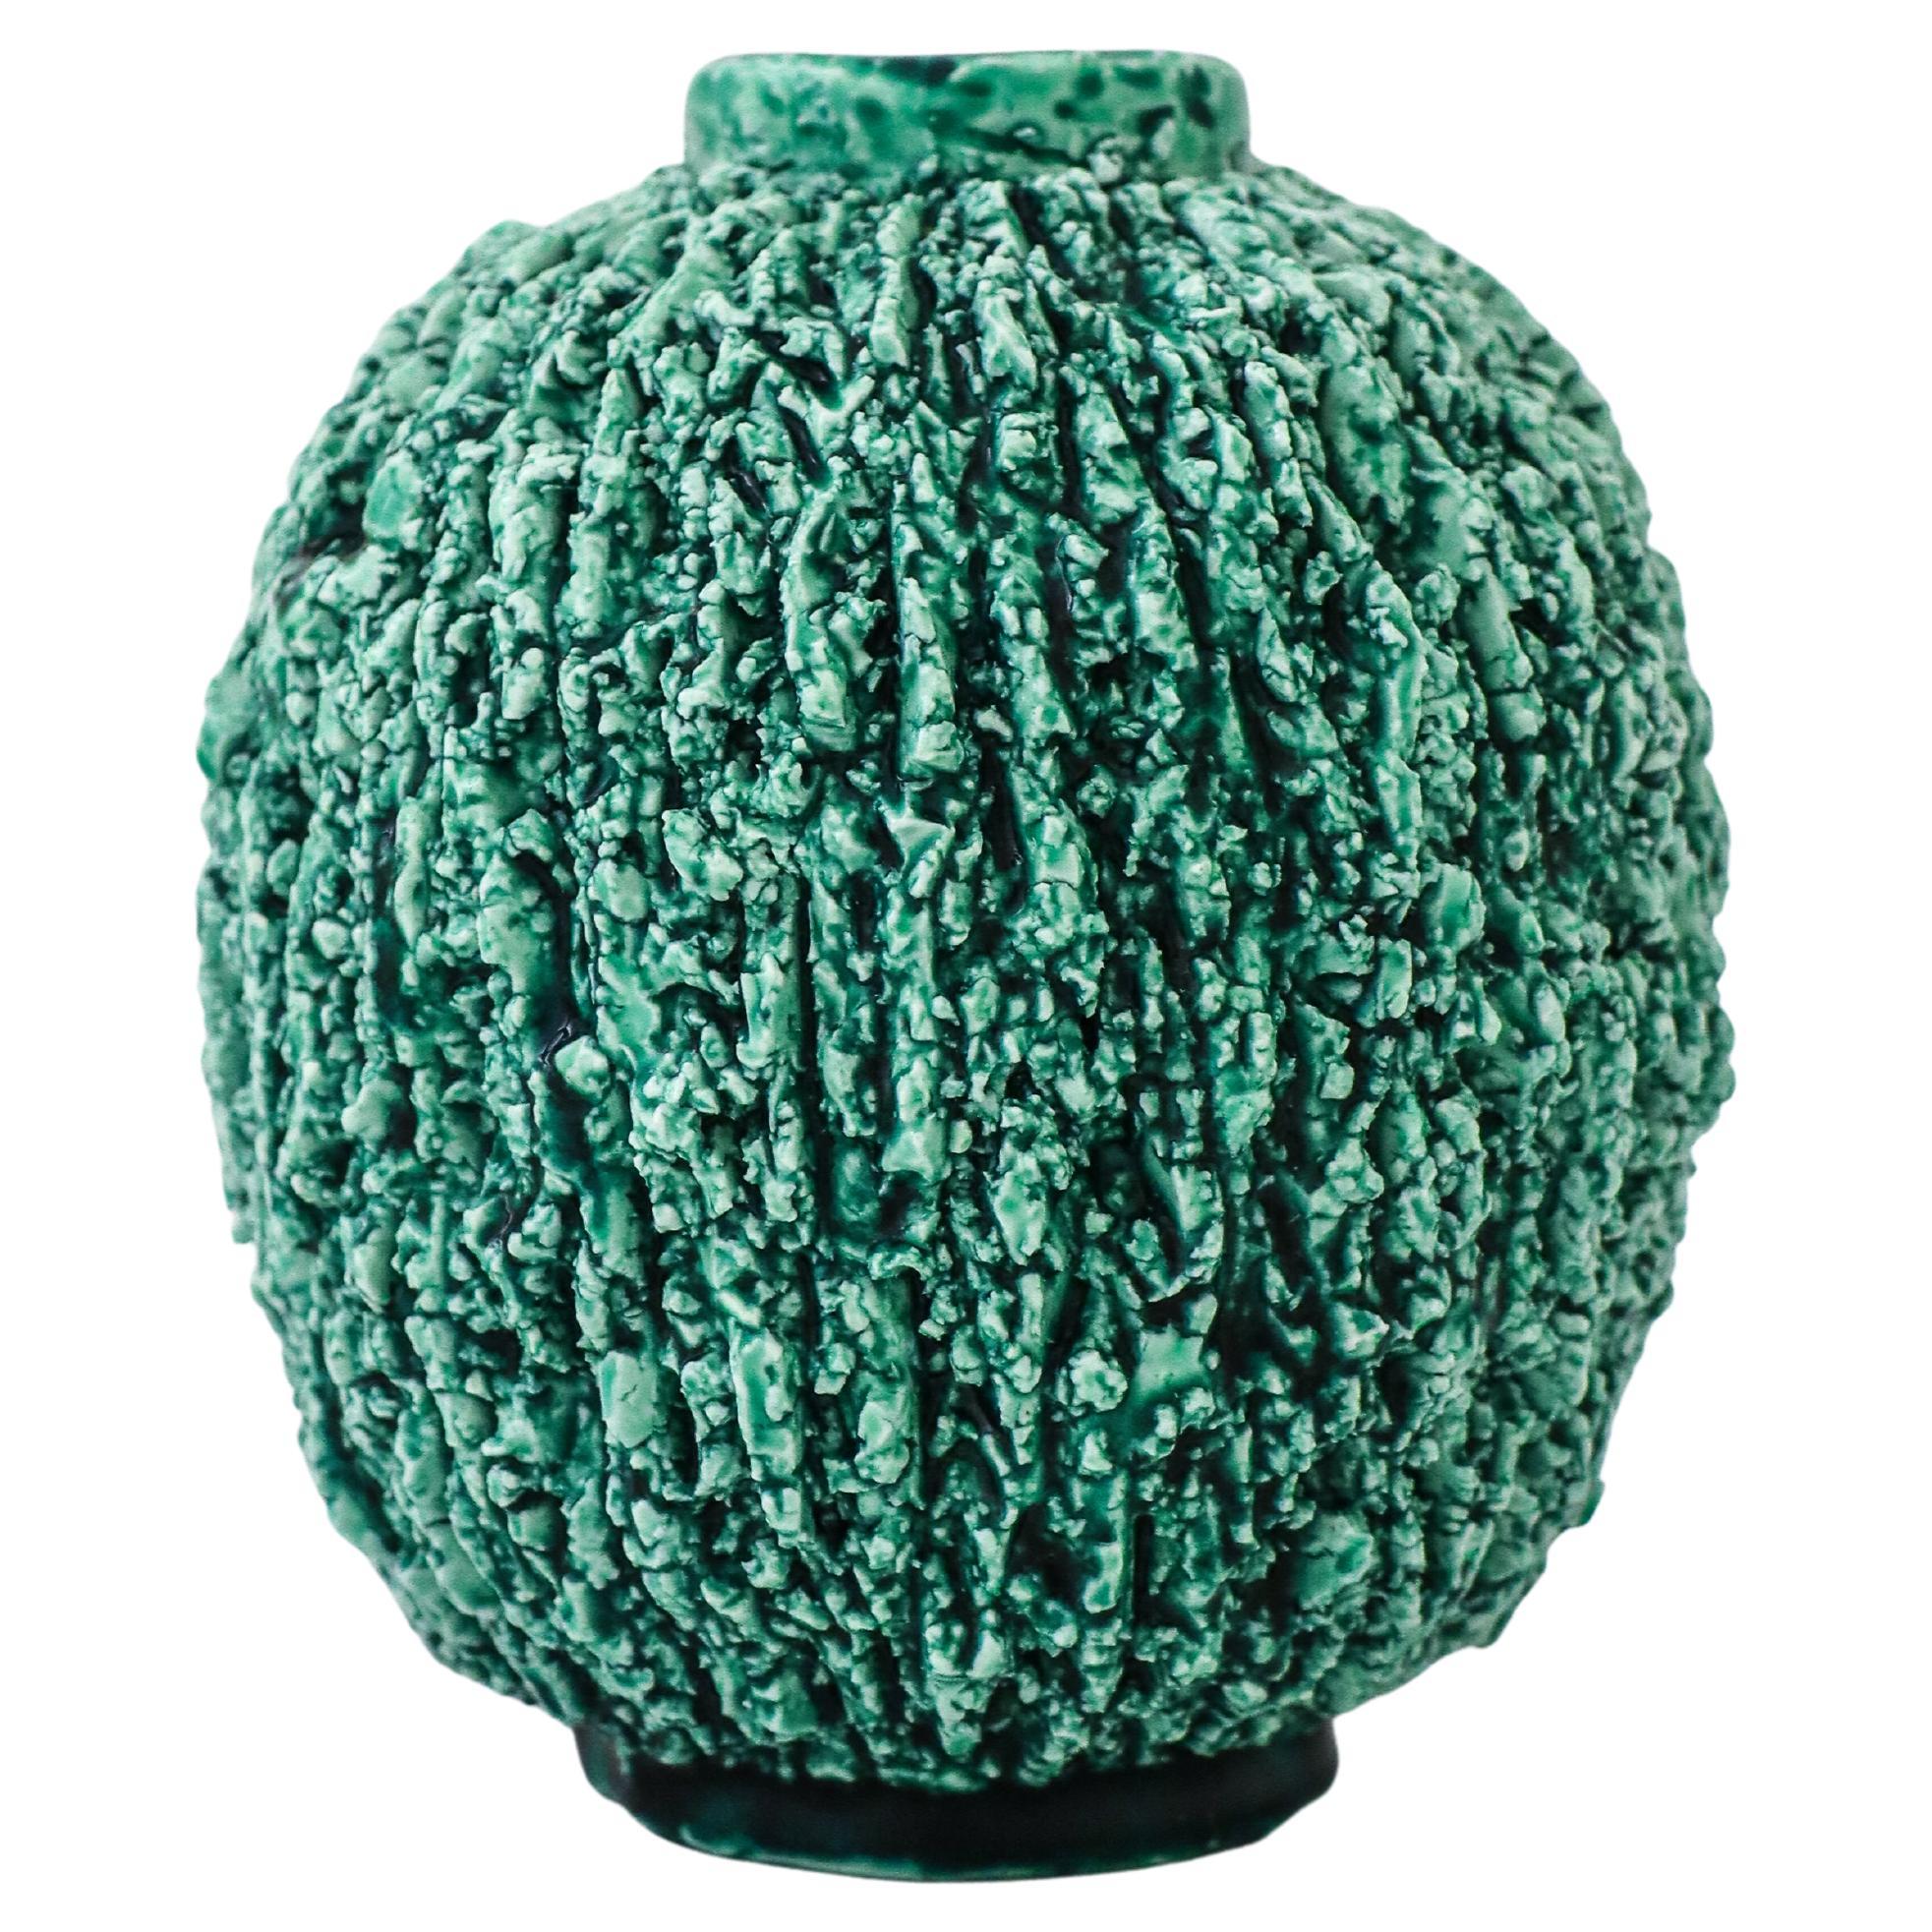 A Green Hedgehog vase - Chamotte - Gunnar Nylund - Rörstrand